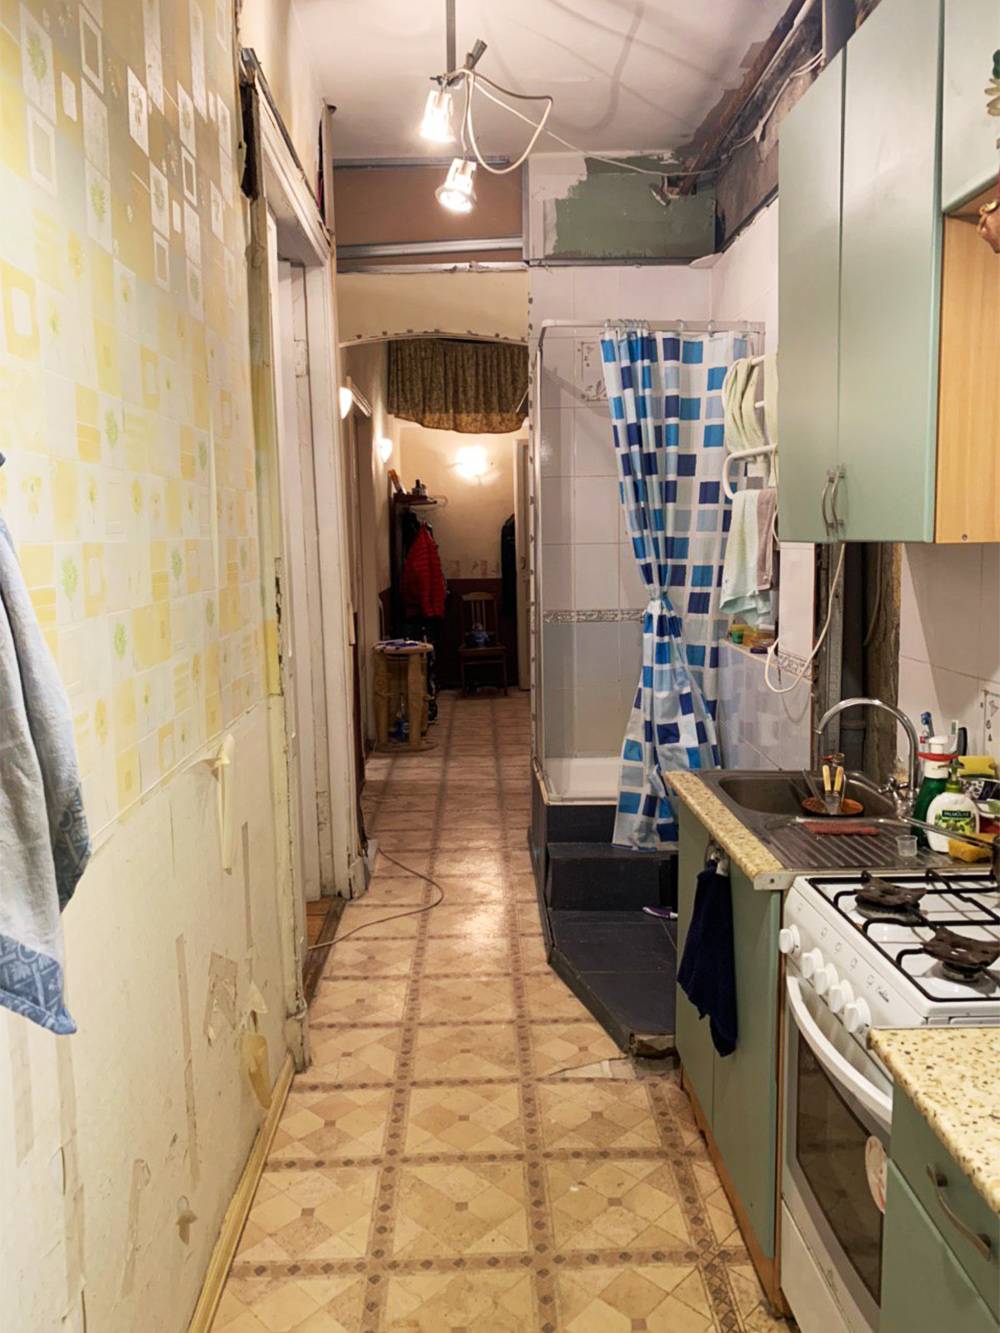 Кухня&nbsp;— в коридоре, душевая кабина&nbsp;— на кухне: классика старого фонда